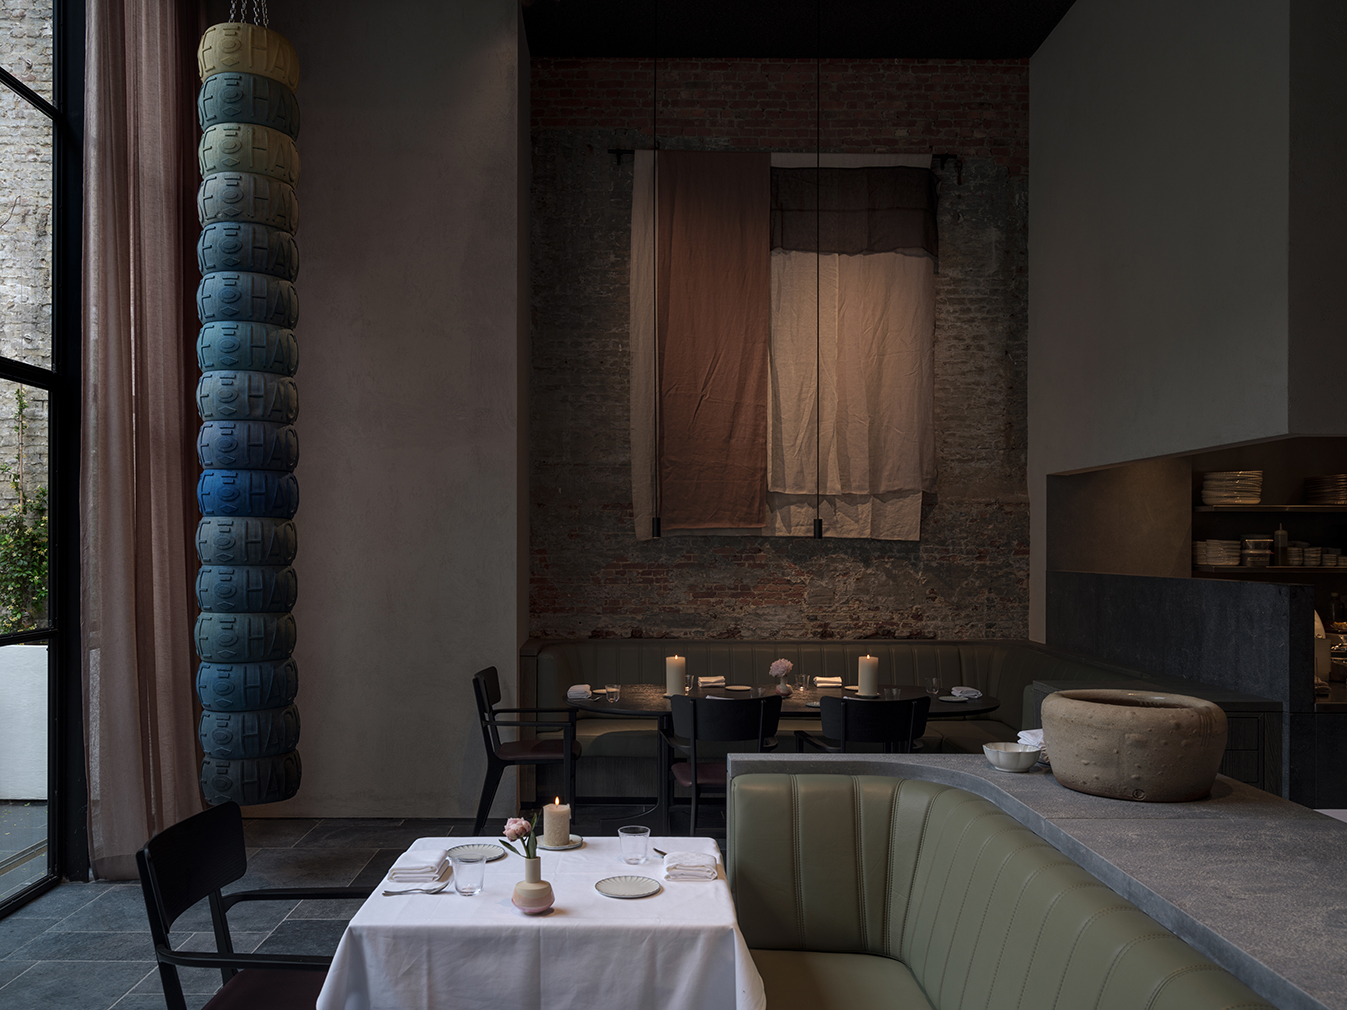 Flemish artists inspire the sumptuous interiors of Antwerp restaurant Le Pristine